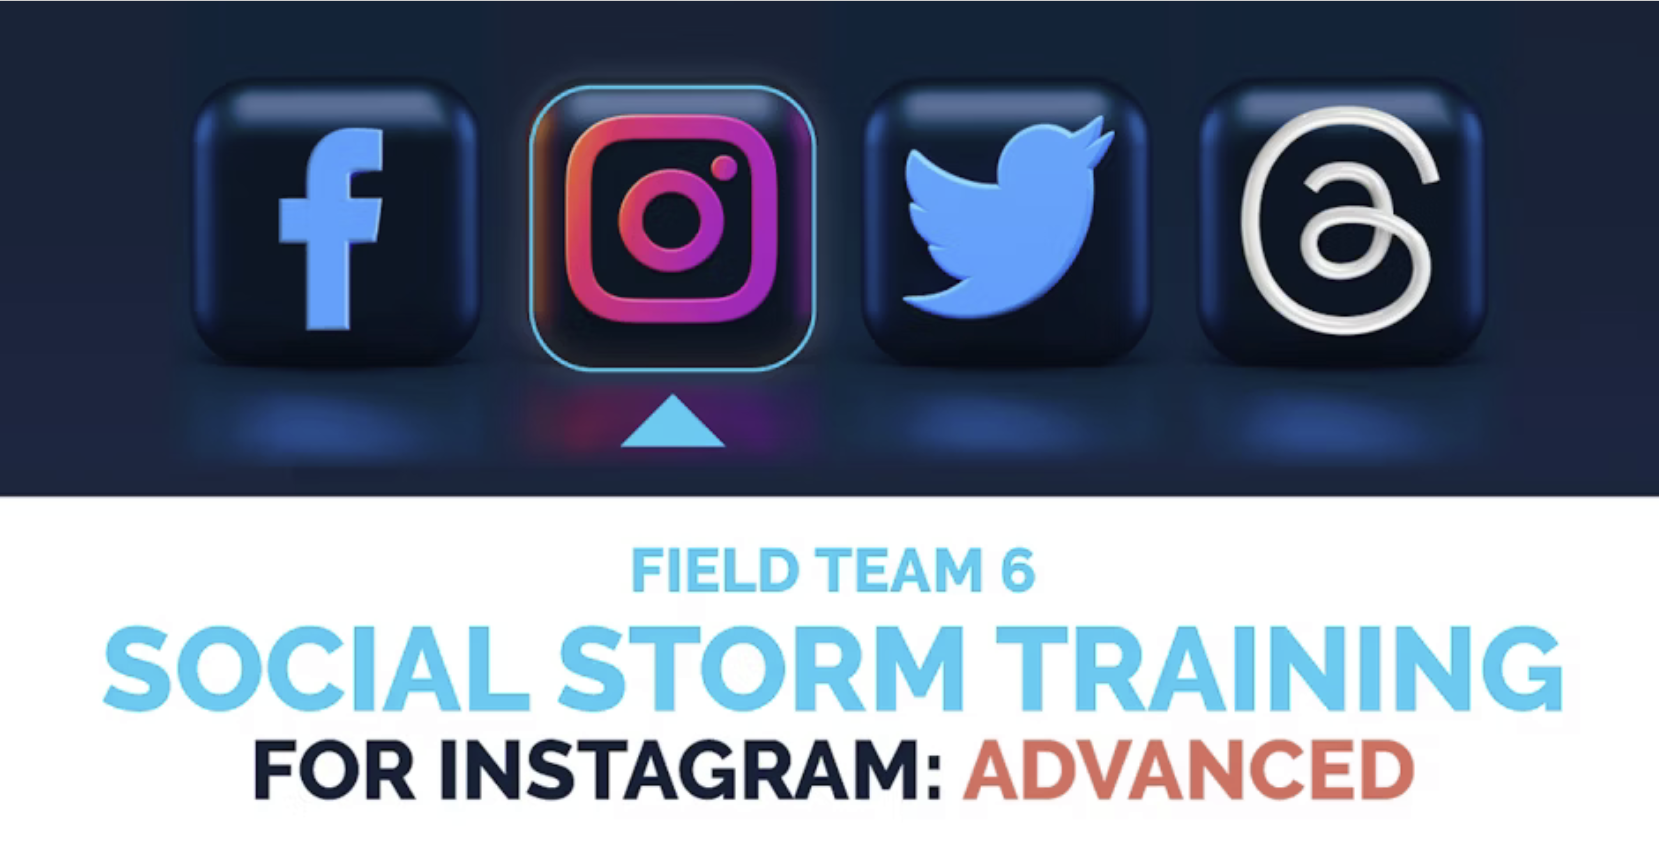 Field Team 6 Social Storm Training for Instagram: Advanced